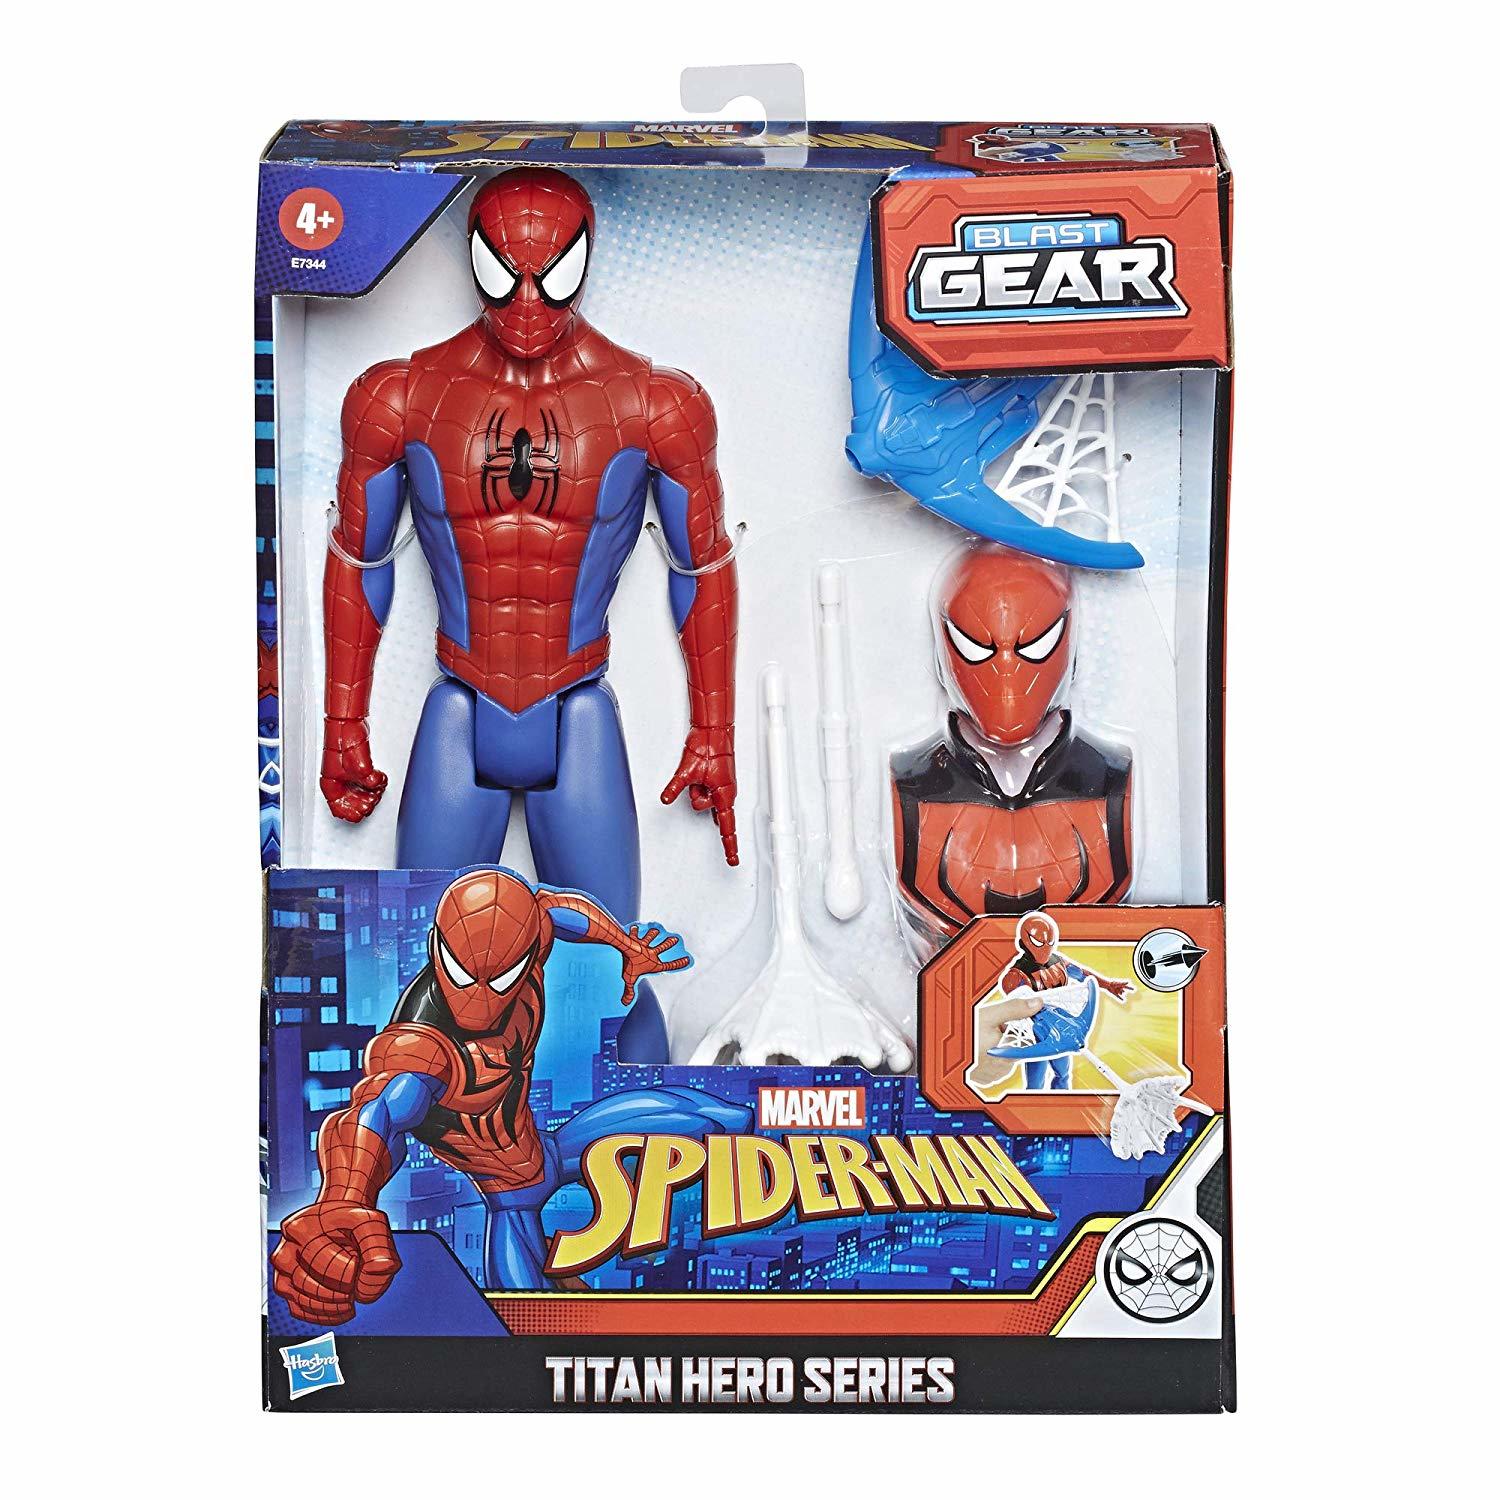 Marvel Spiderman Titan Hero Blast Gear Spiderman2